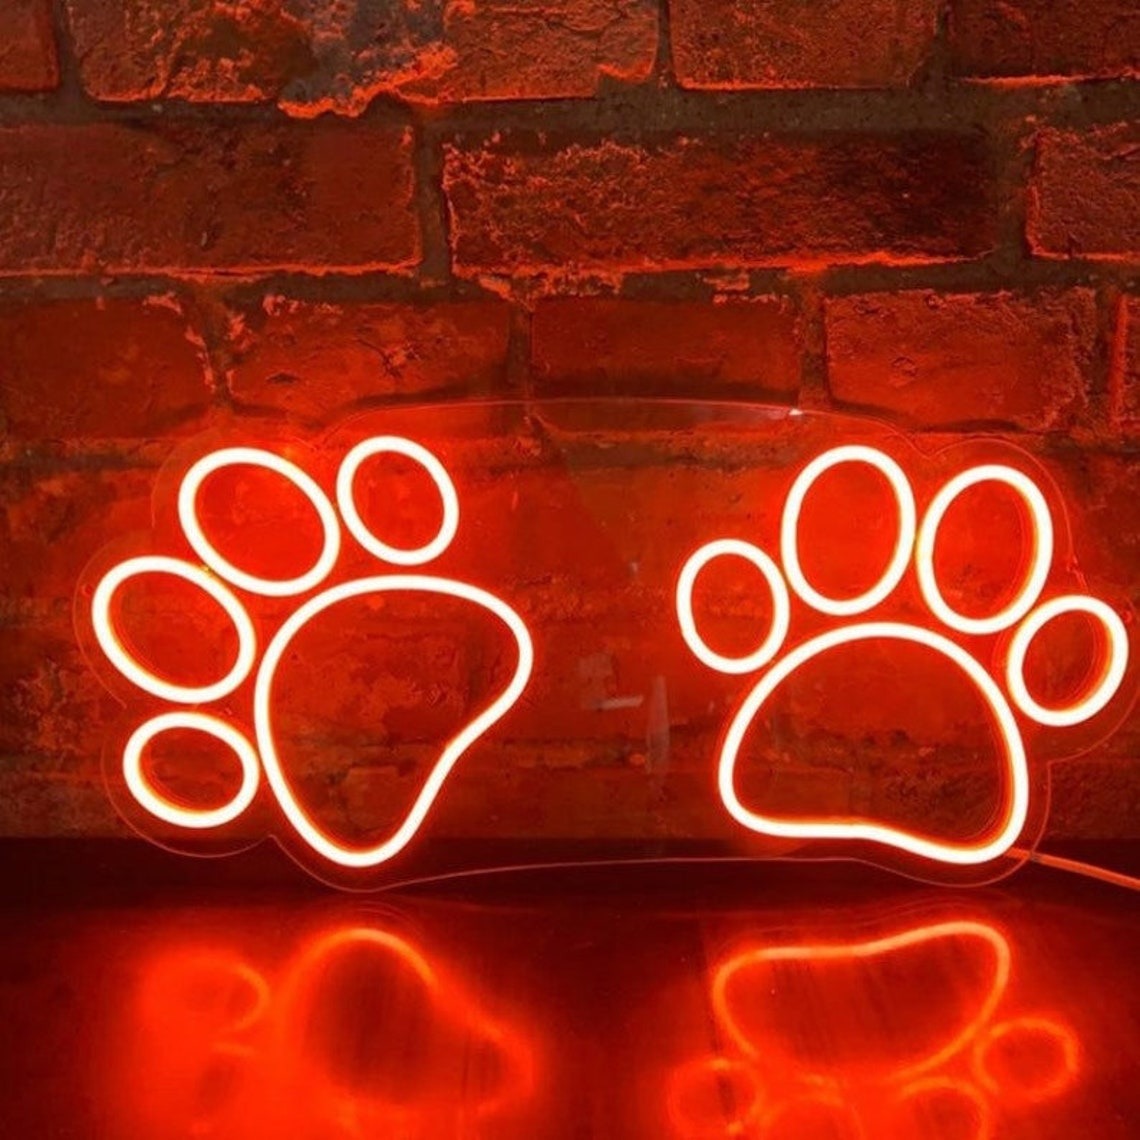 NEONIP-100% Handmade Dog Paw LED Neon Sign